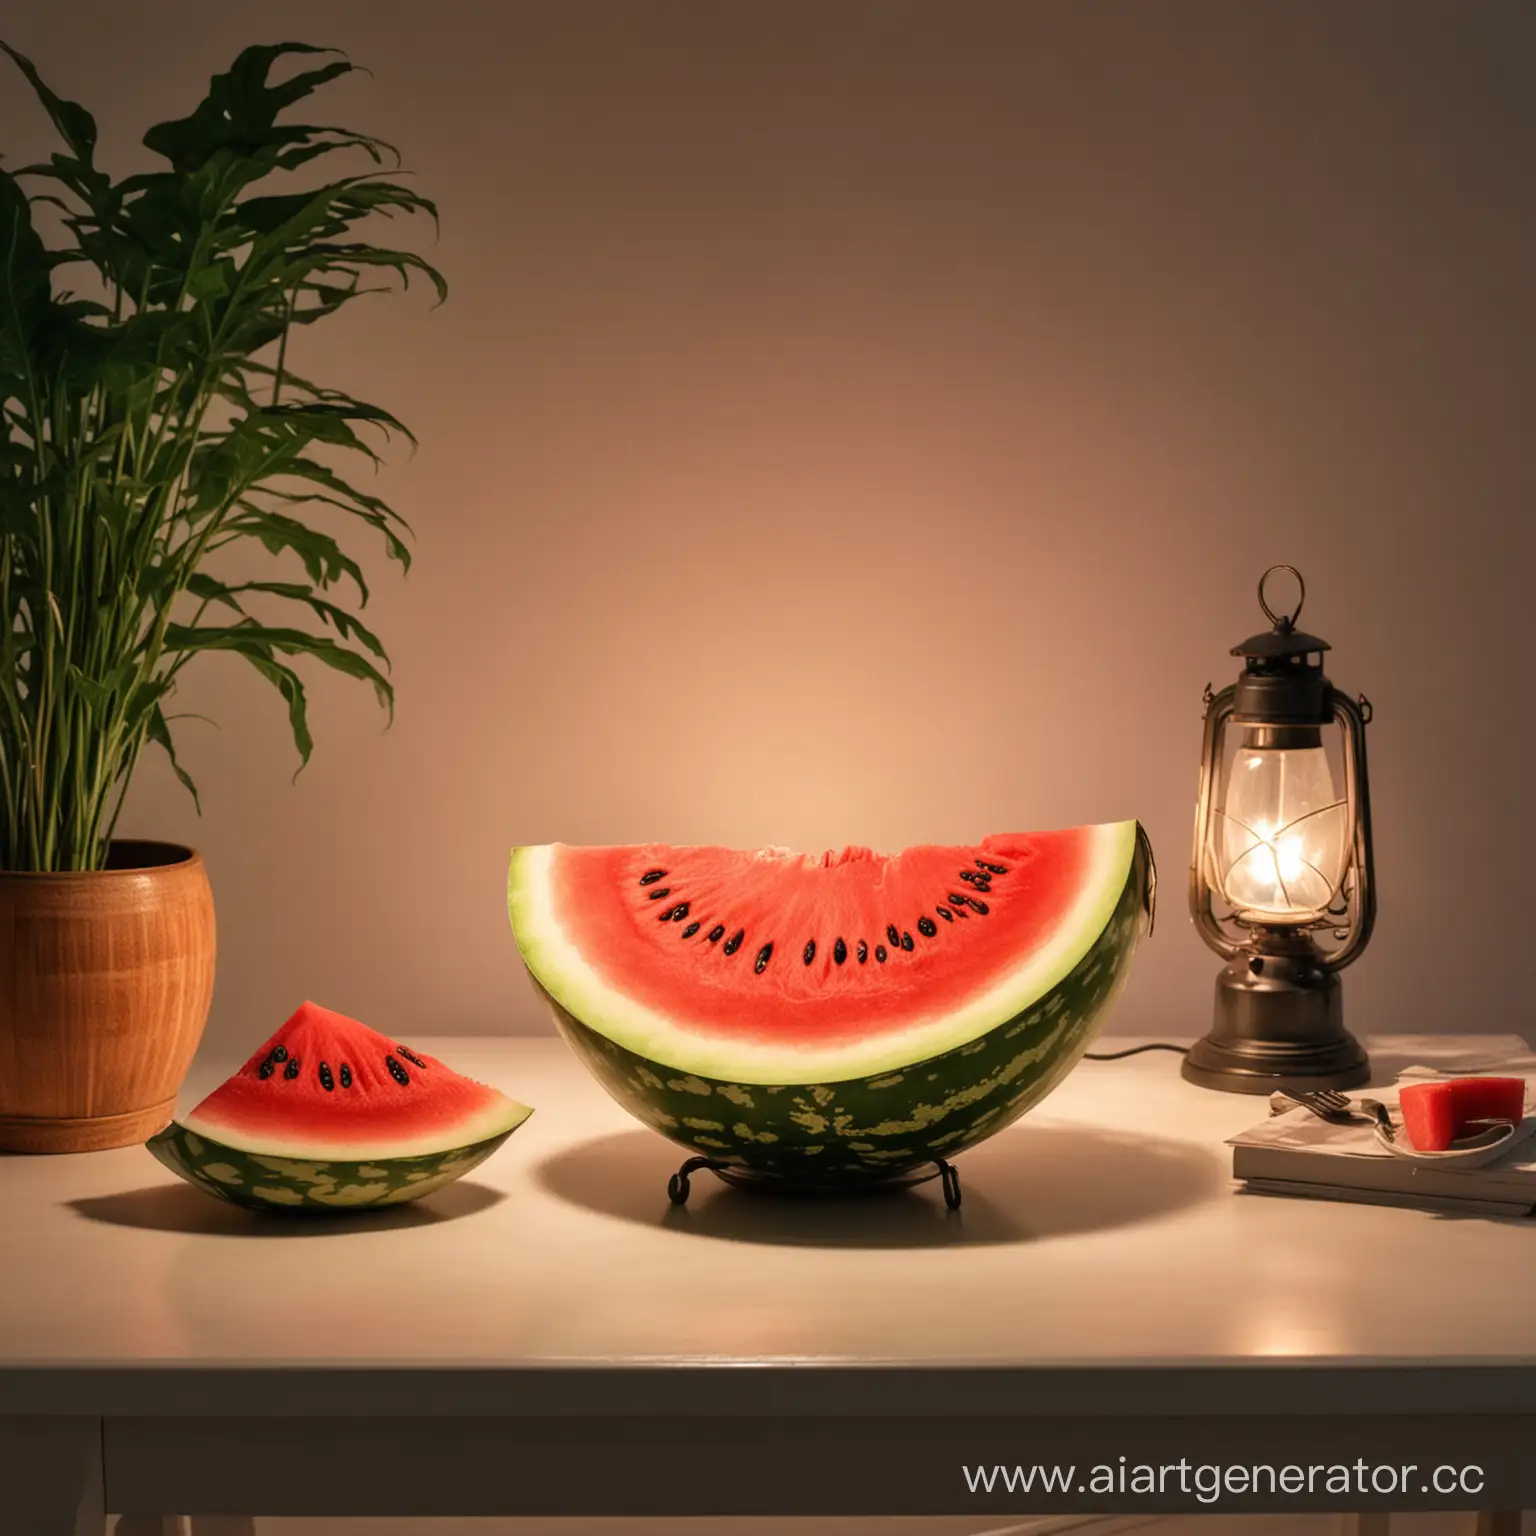 Illuminated-Watermelon-on-Table-Fresh-Fruit-in-Warm-Glow